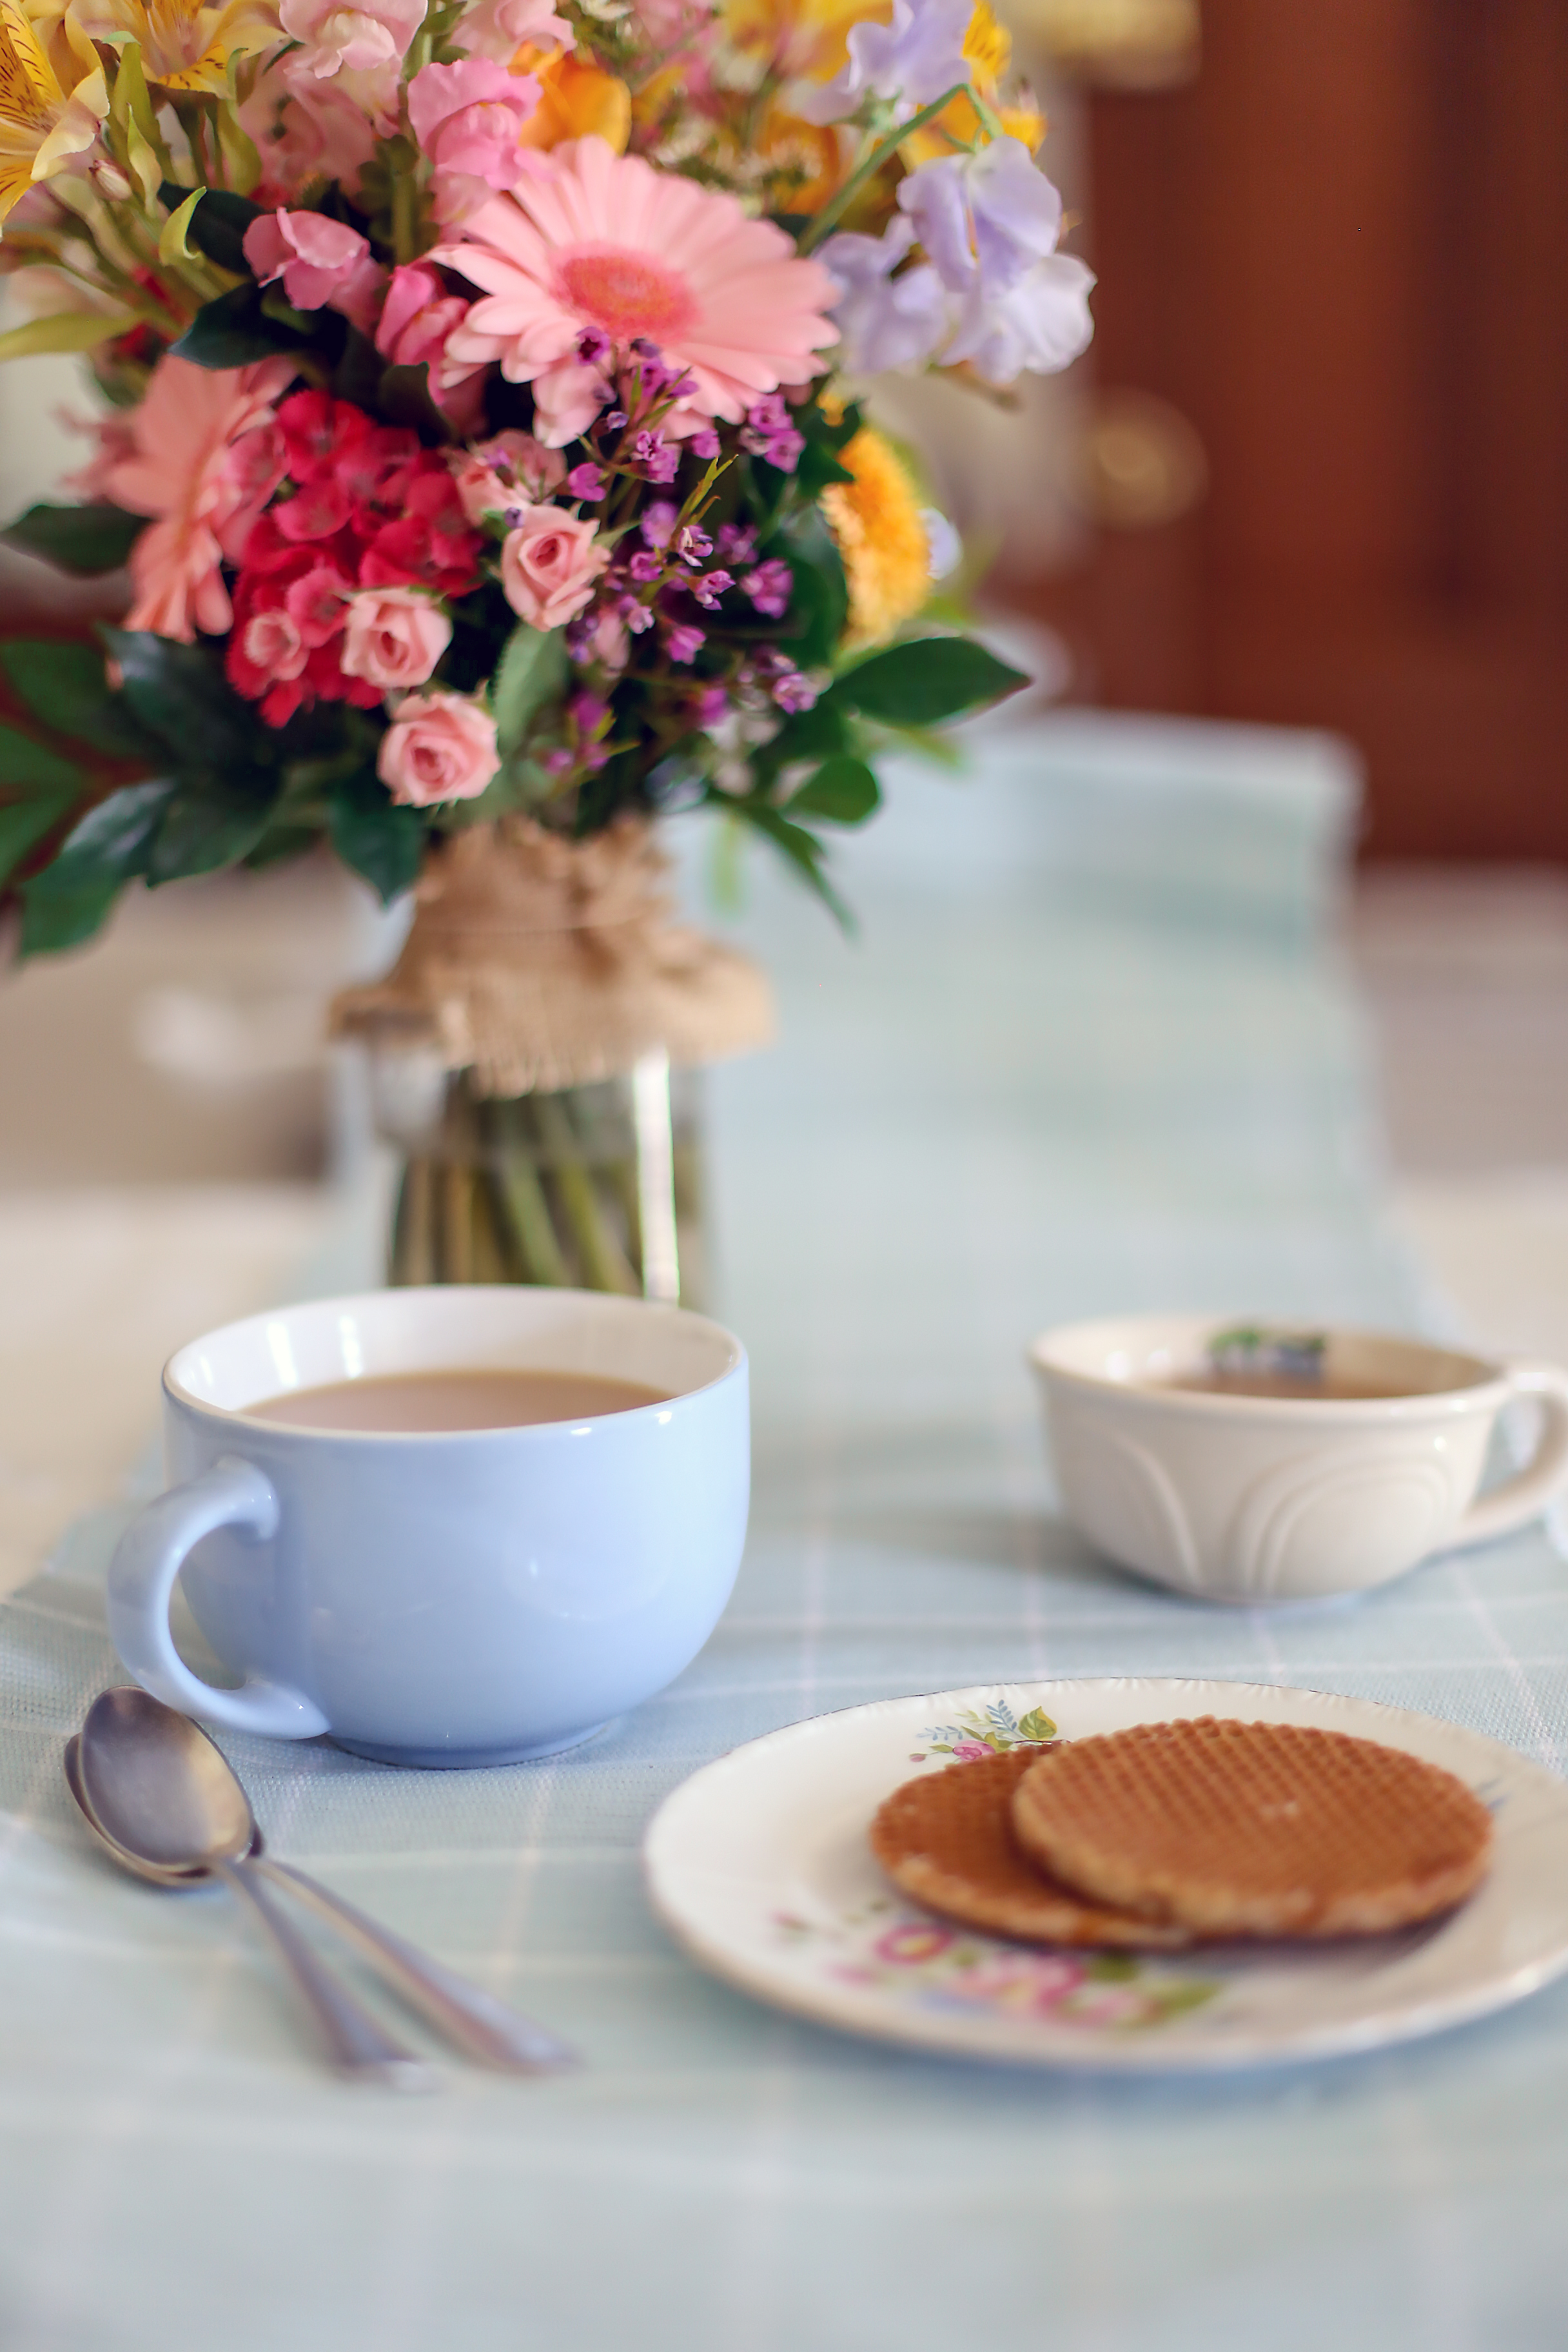 morning tea with flowers l a splash of vanilla